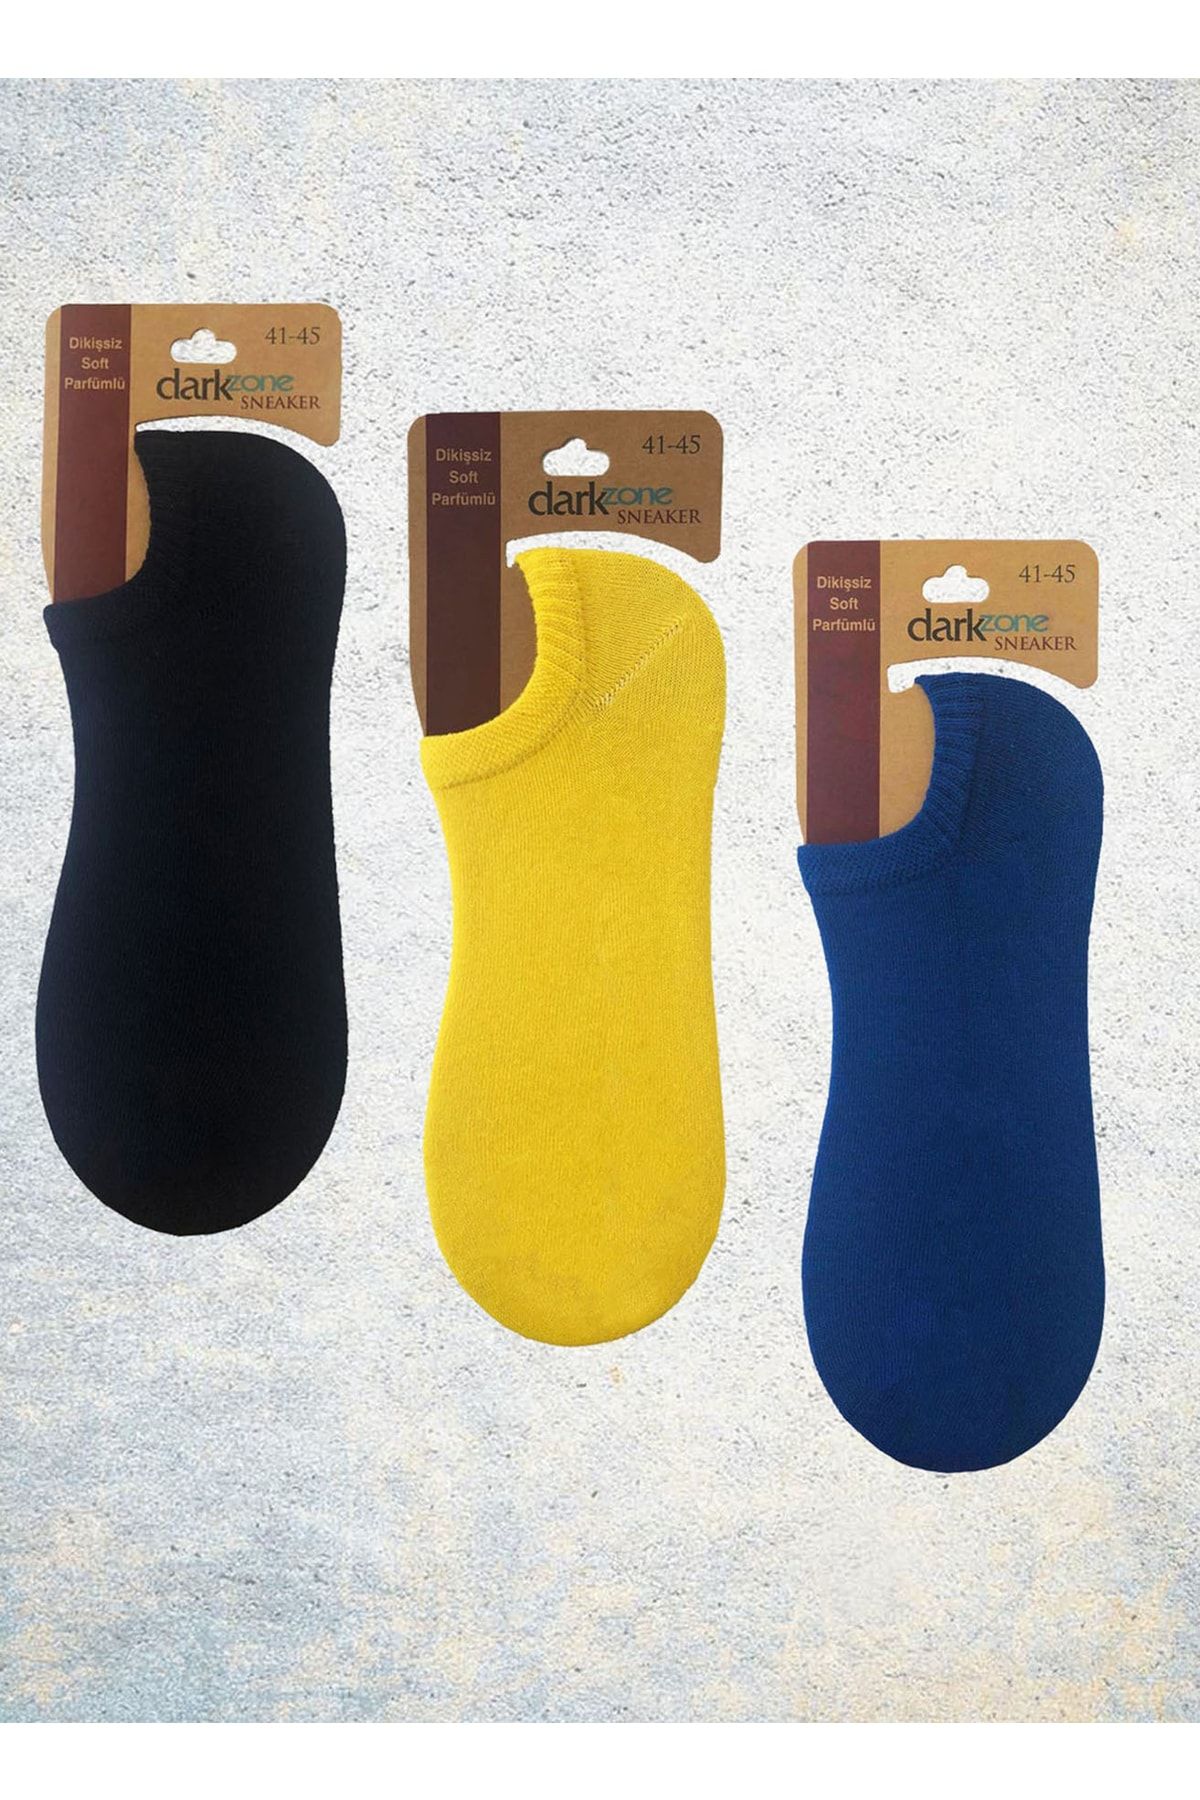 Darkzone Erkek Siyah Sarı Mavi Soket Çorap 3' Lü Paket- DZCP3105